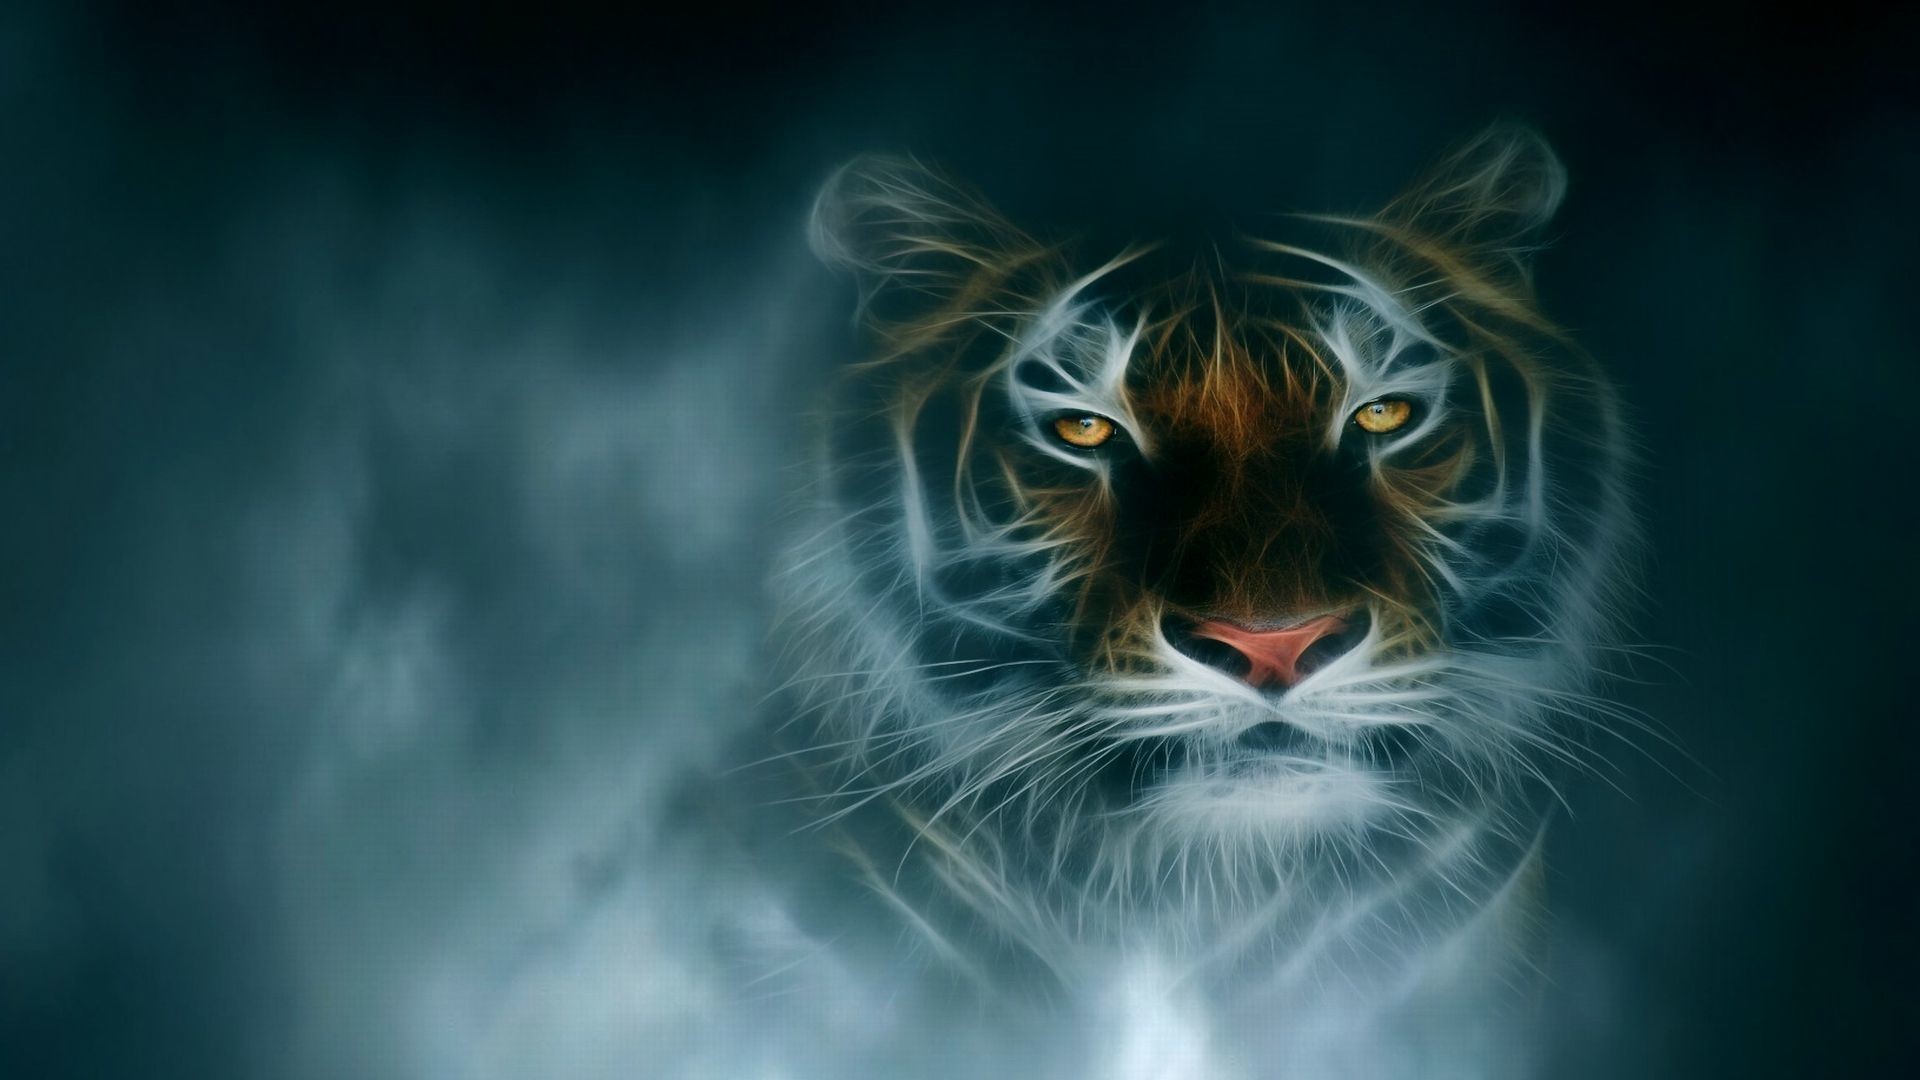 1920x1080  Fantasy Tiger Wallpaper HD